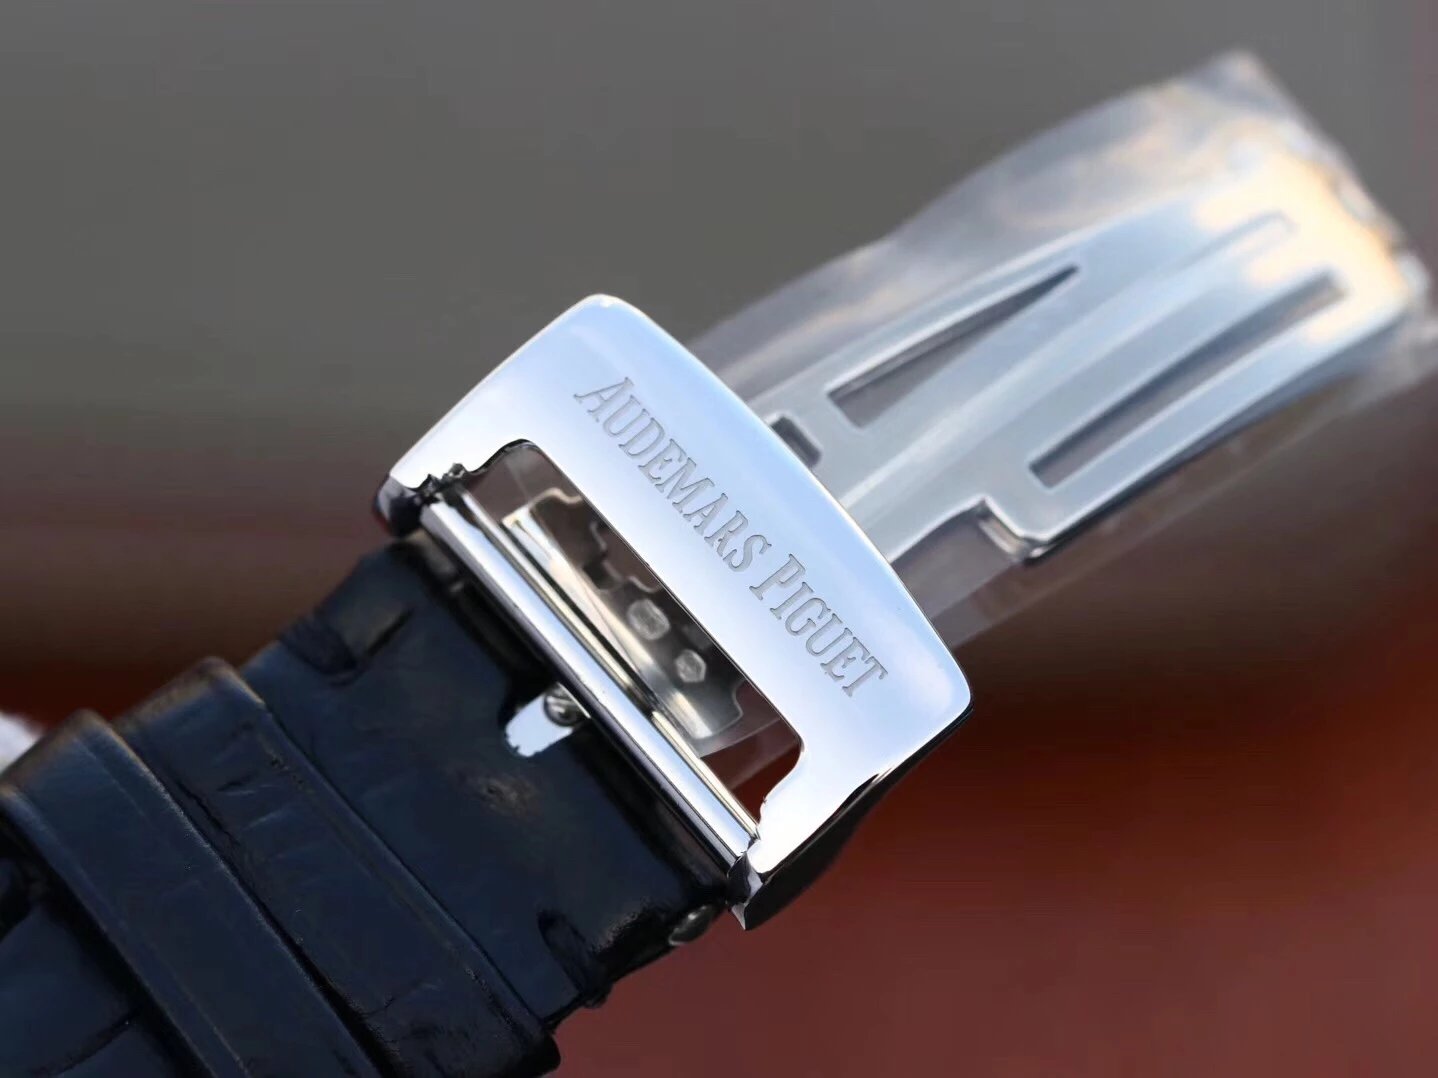 V9千禧系列15350款男装腕表，一款上手才知道靓的耐看型手表